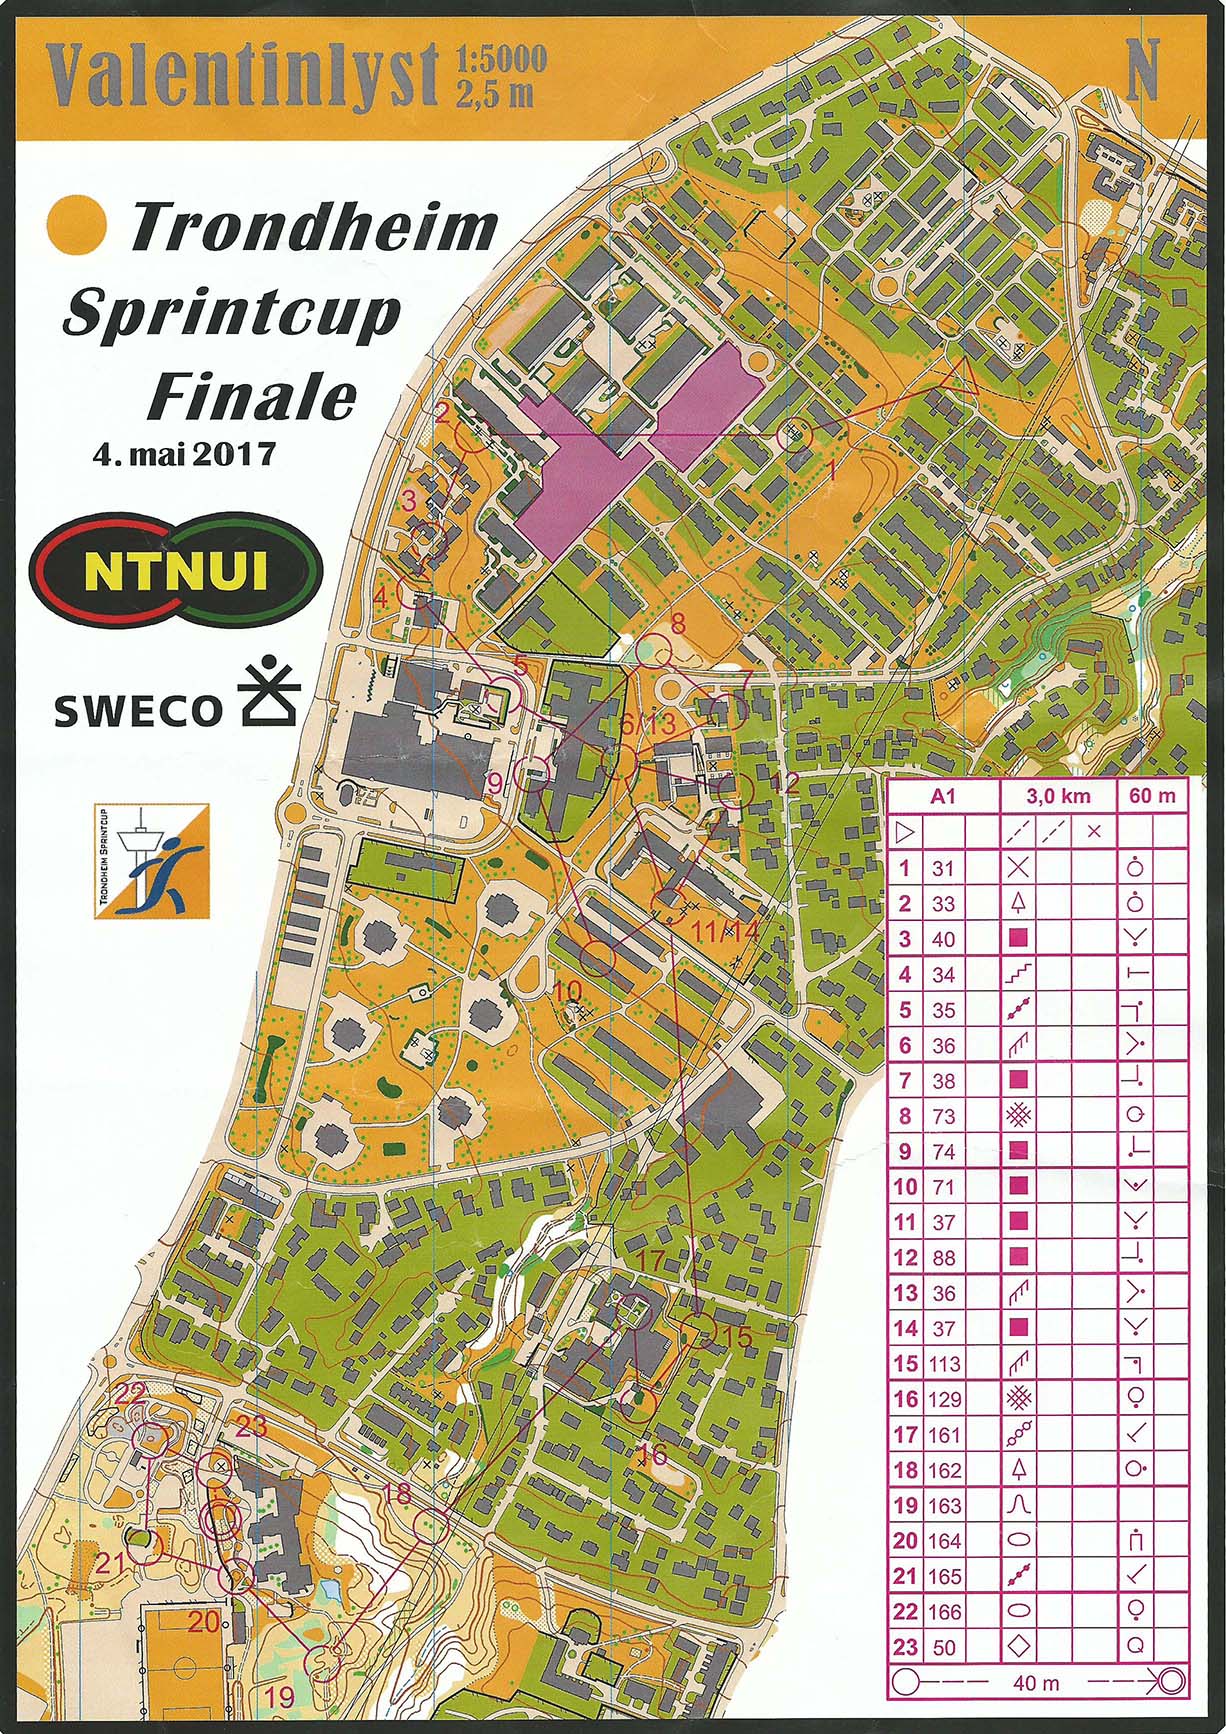 Trondheim Sprintcup Final (04/05/2017)